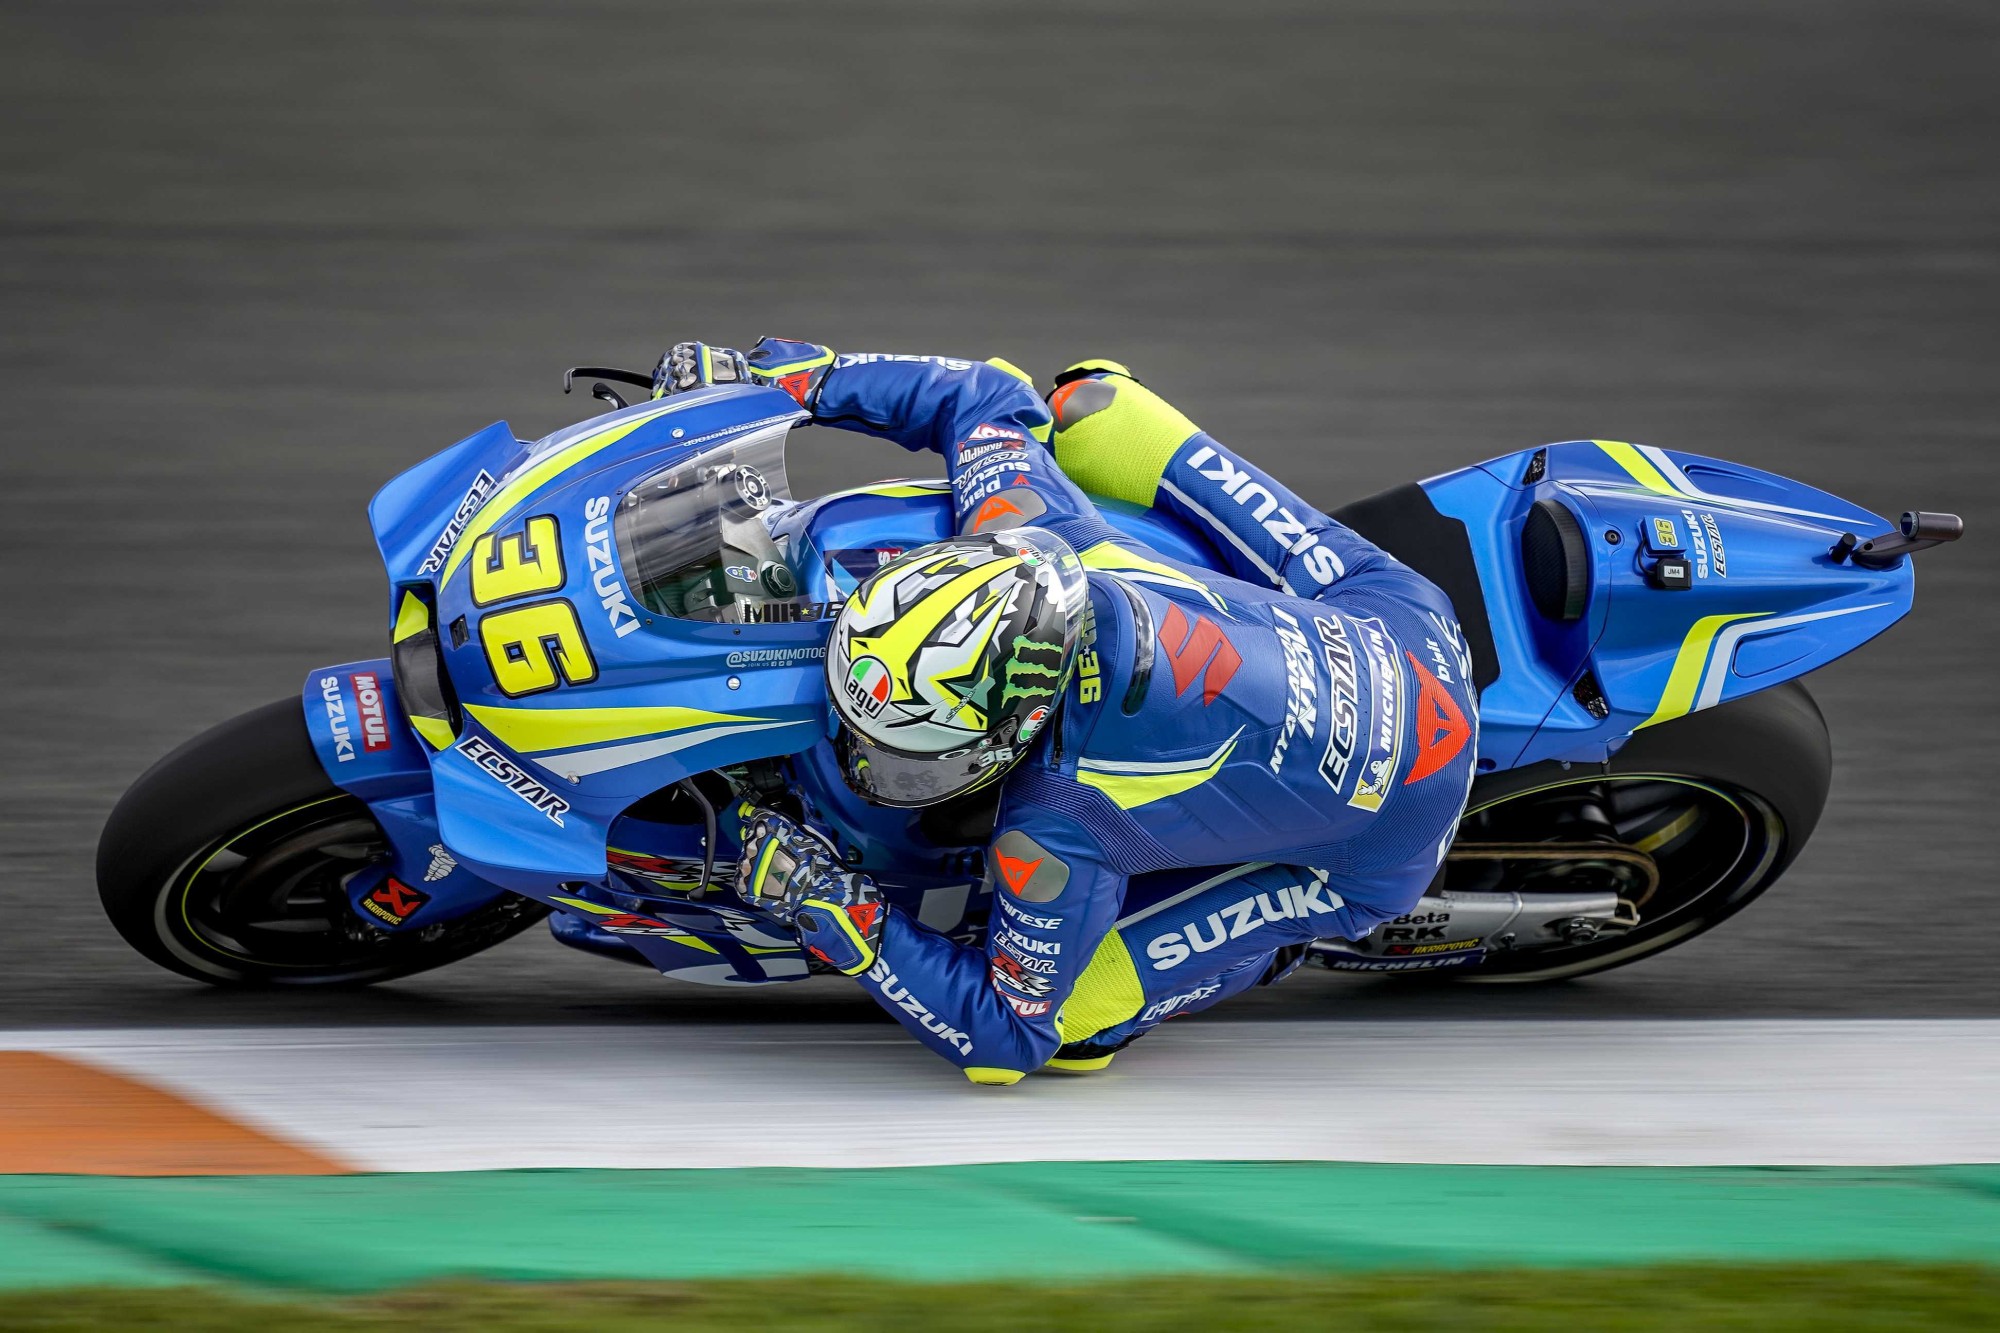 MotoGP Video Go Behind The Scenes During Suzukis Post-Season Tests